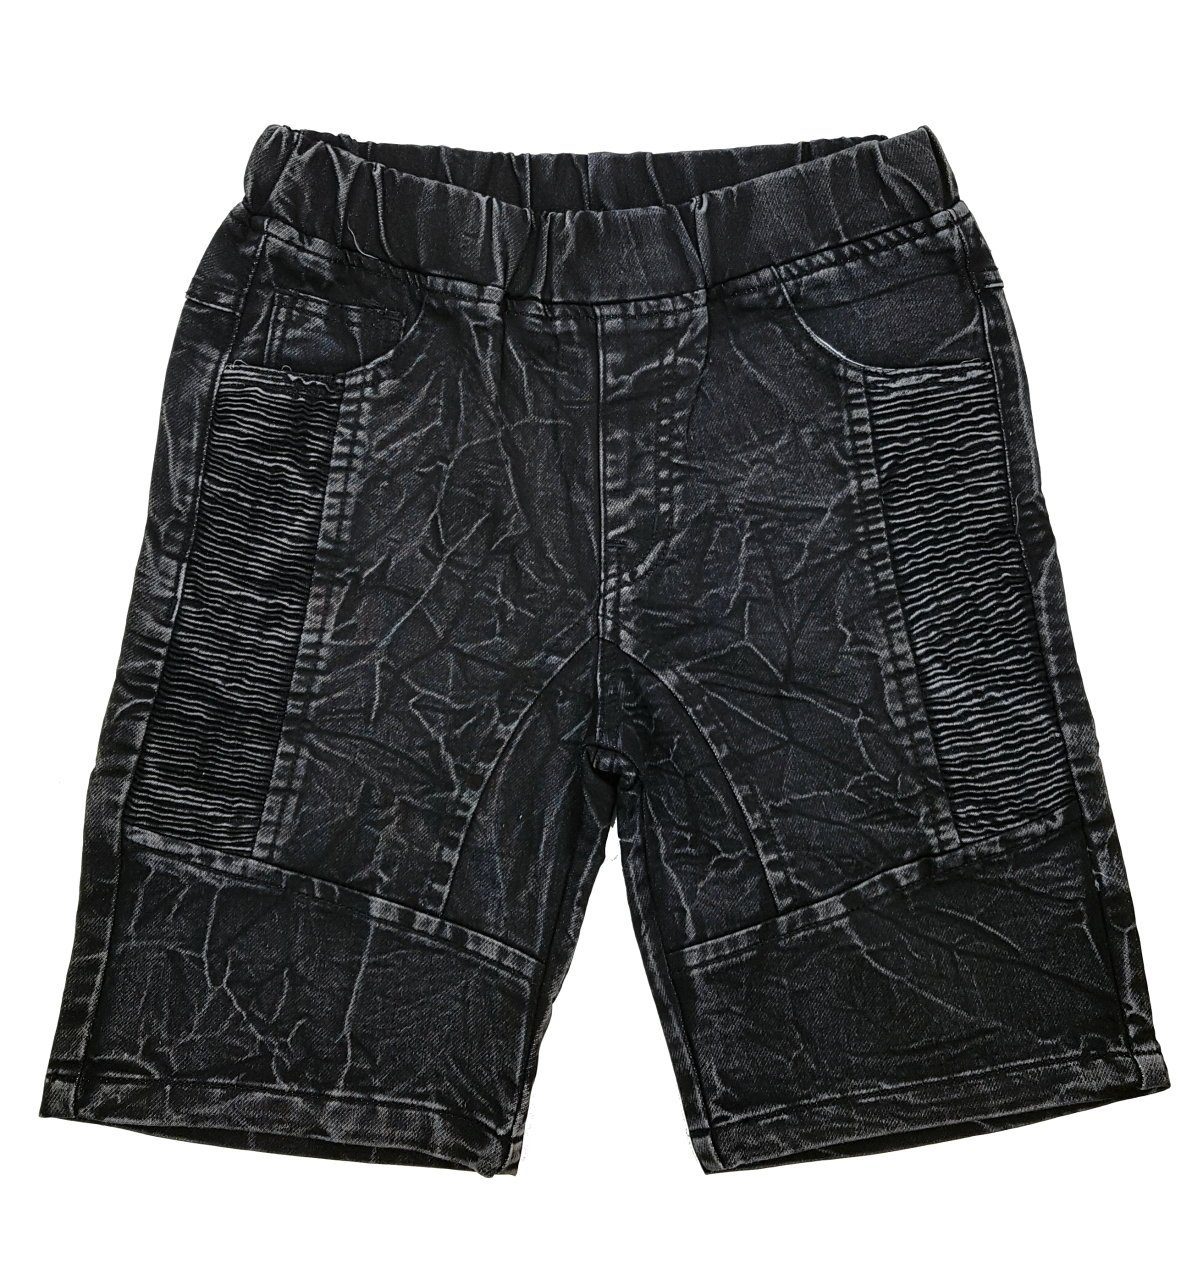 Sweatshorts Stretch Fashion Jn205 Jeans Sommerhose, Bermuda Hose, Boy